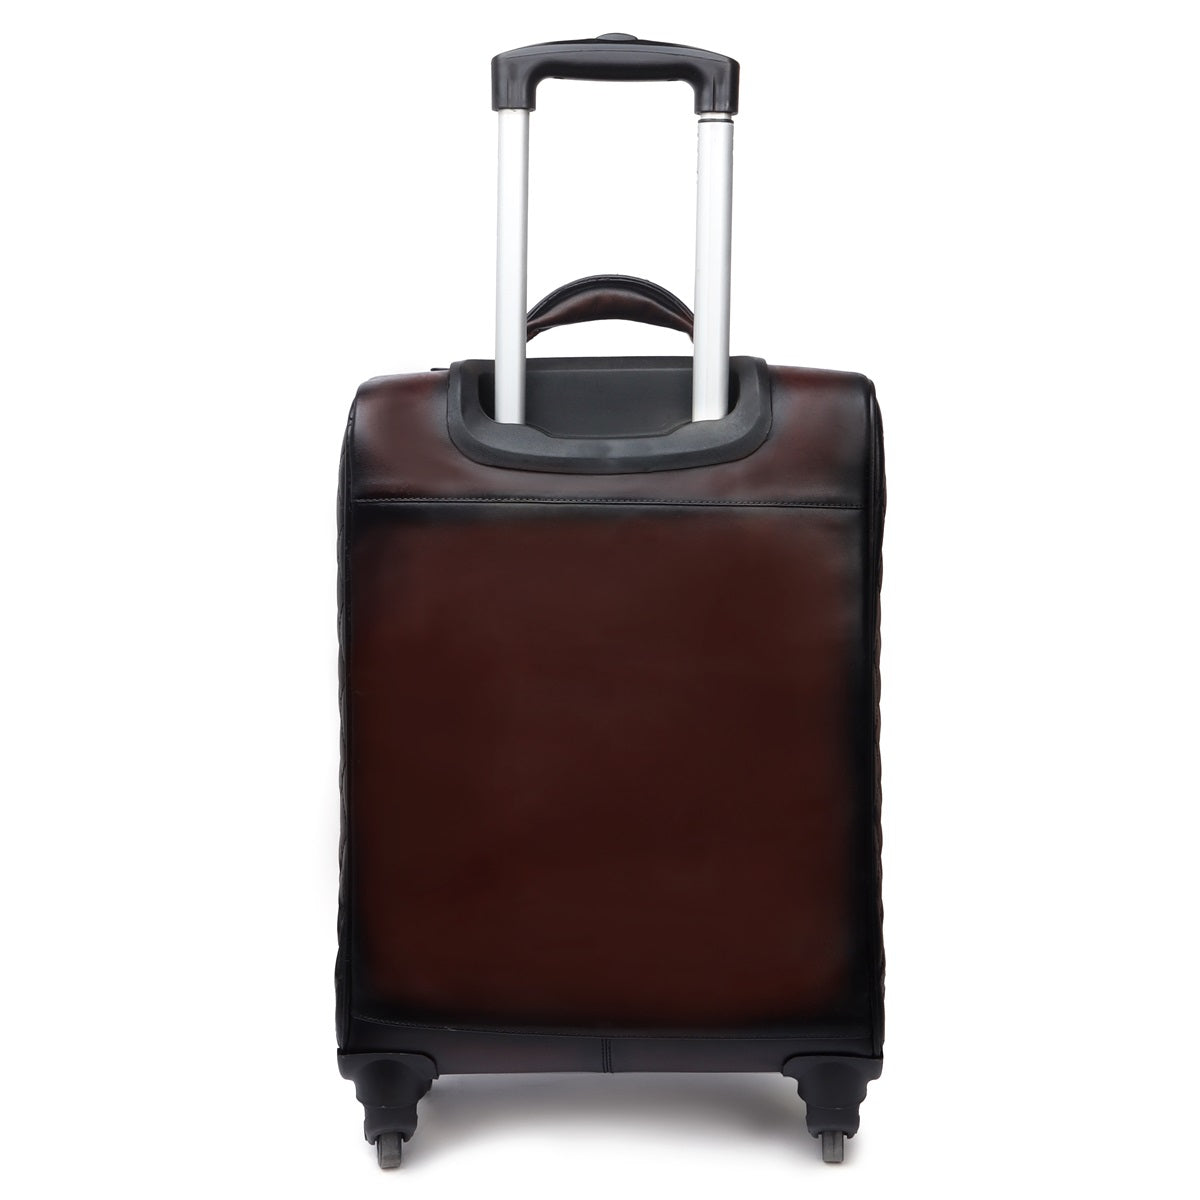 Trolly Pure Leather Cabin Luggage- Brown, Black & Tan